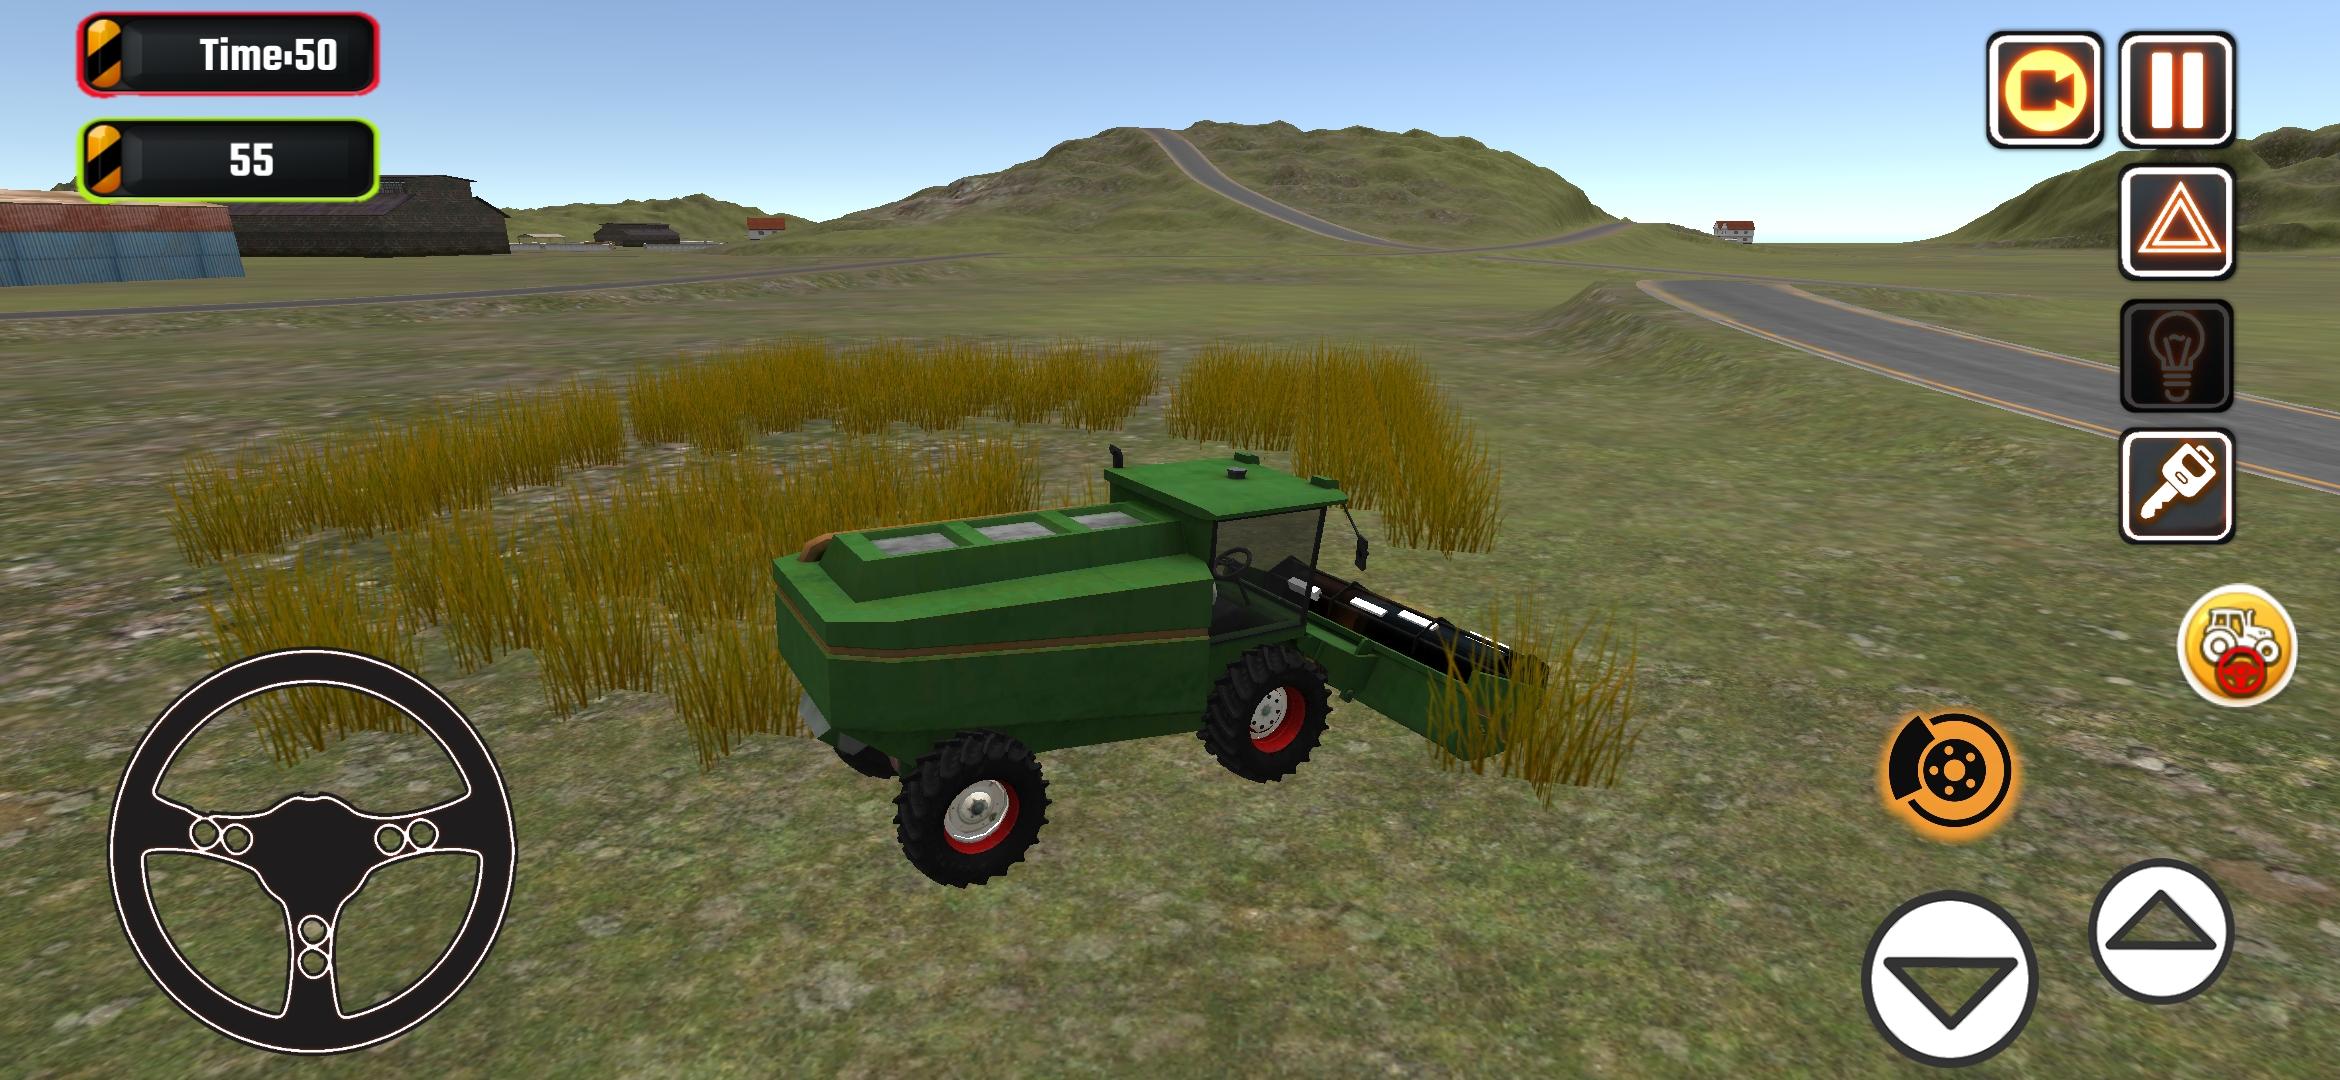 Симулятор вождения трактора. Езда на тракторе игра. Игра езда на тракторе ферма. Игры испытания на тракторах. Игра трактор в марте